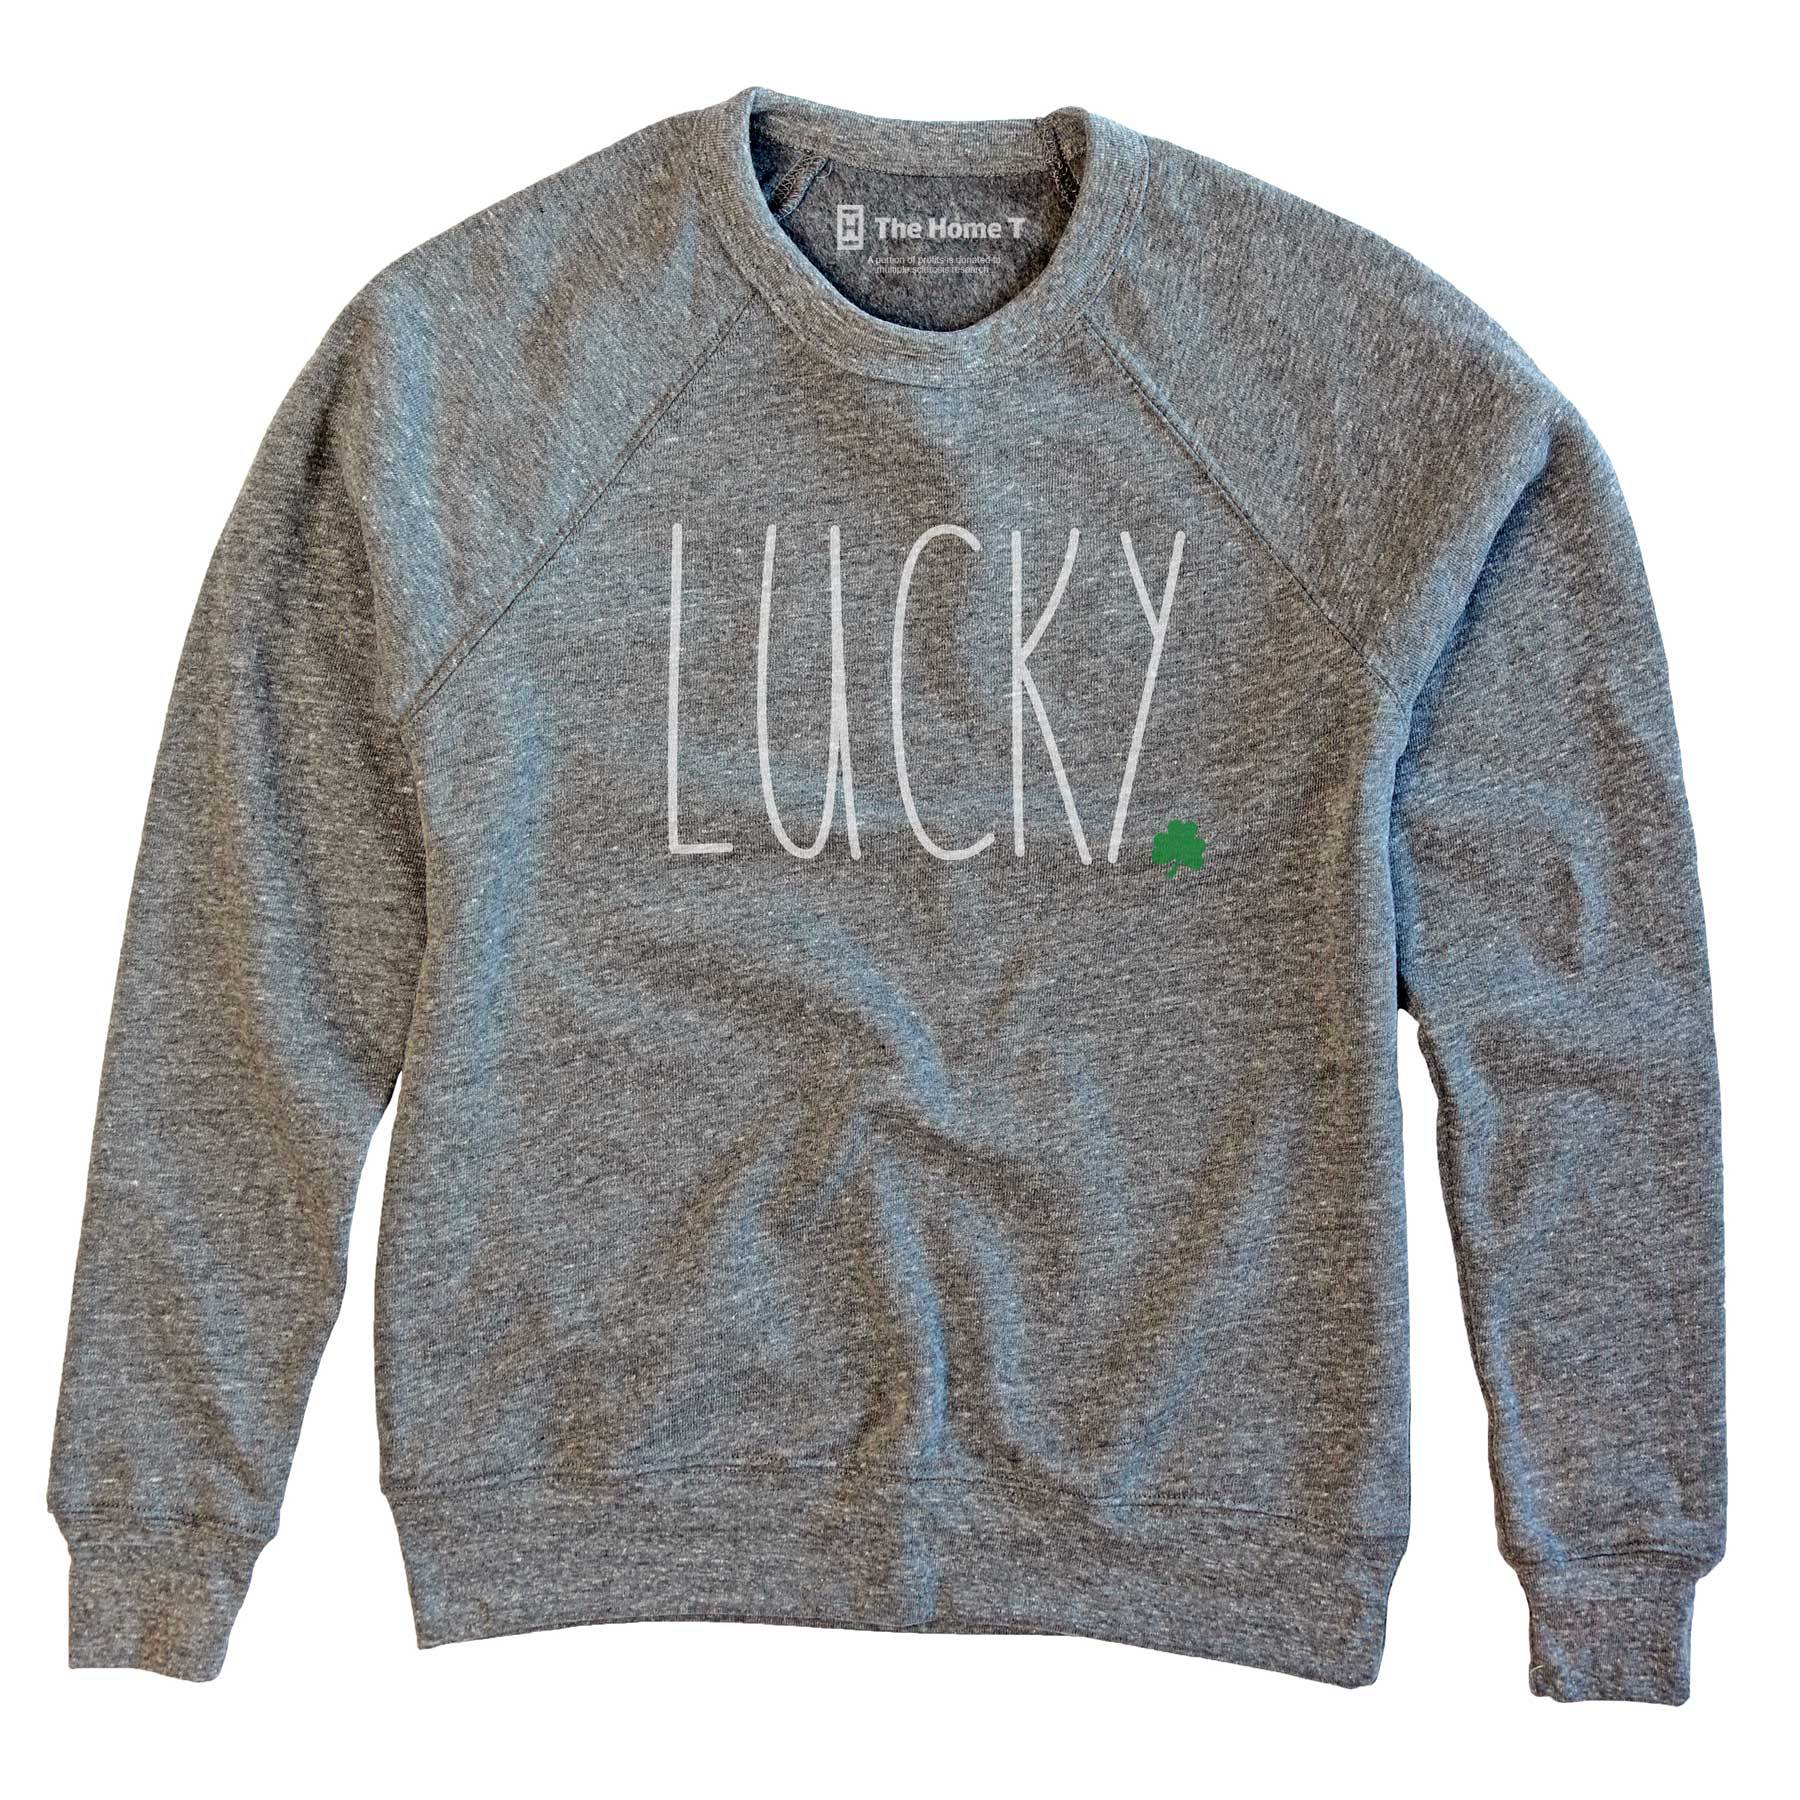 Lucky Sweatshirt - The Home T.